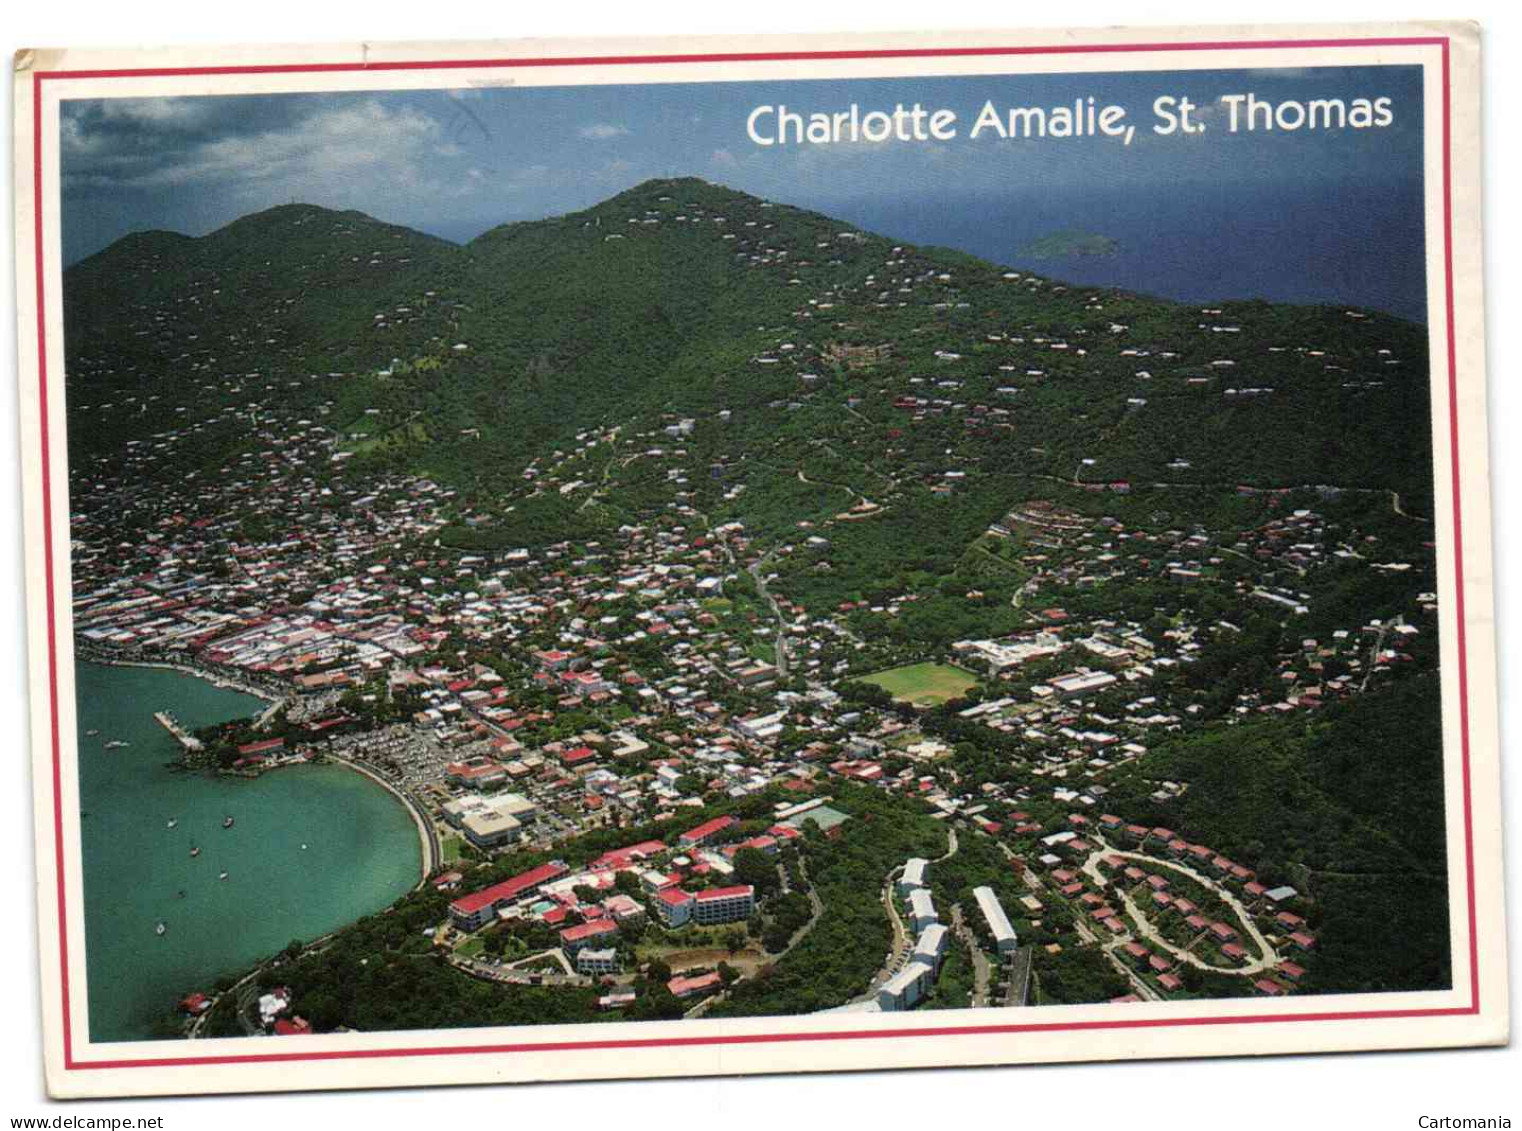 Charlotte Amalie - St. Thomas - Vierges (Iles), Amér.